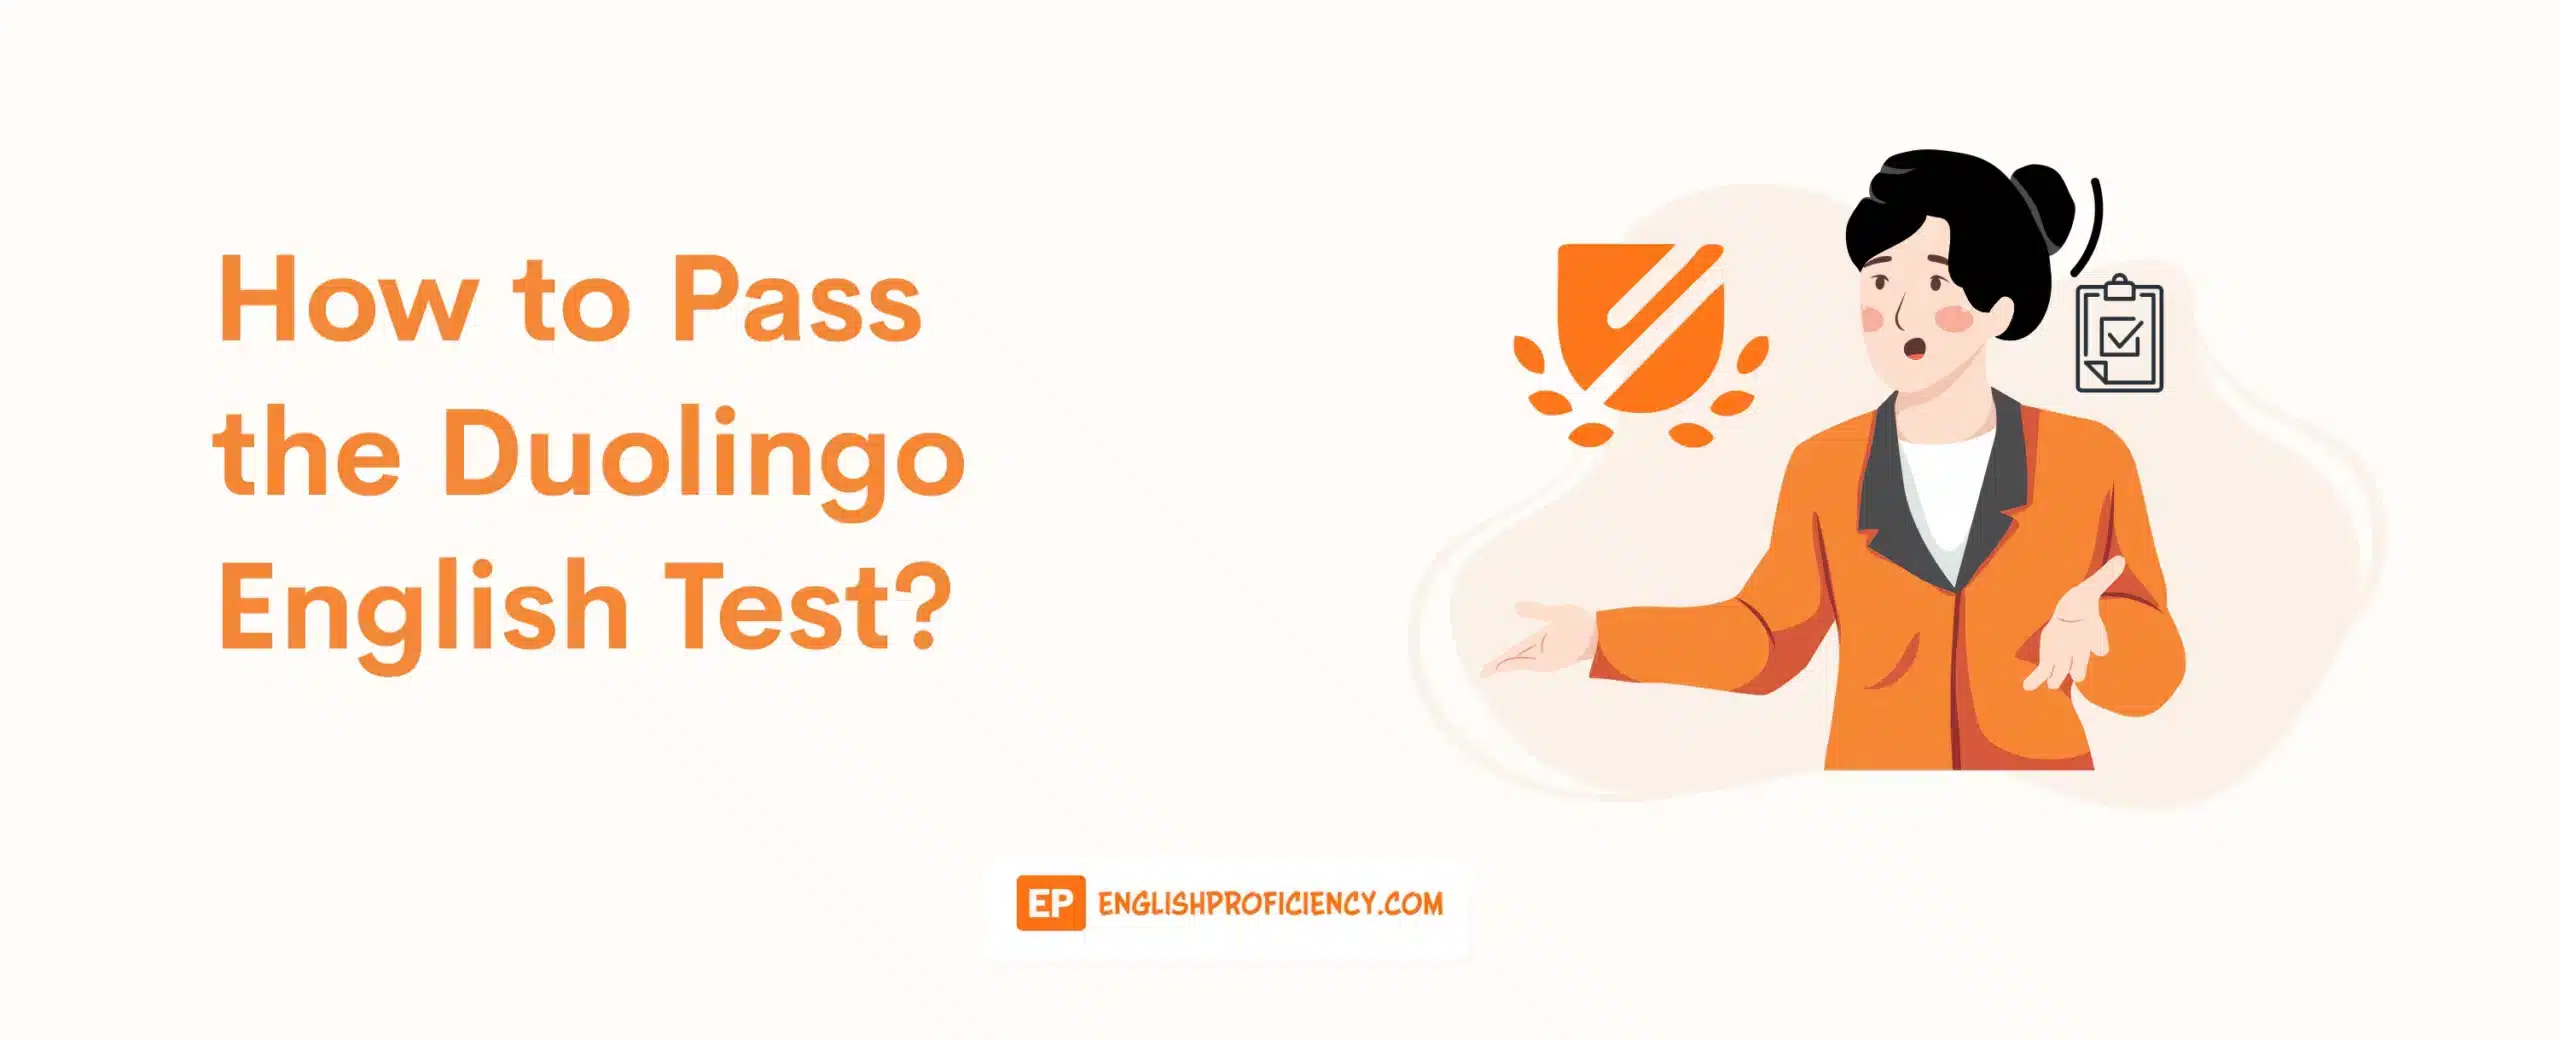 How to Pass the Duolingo English Test